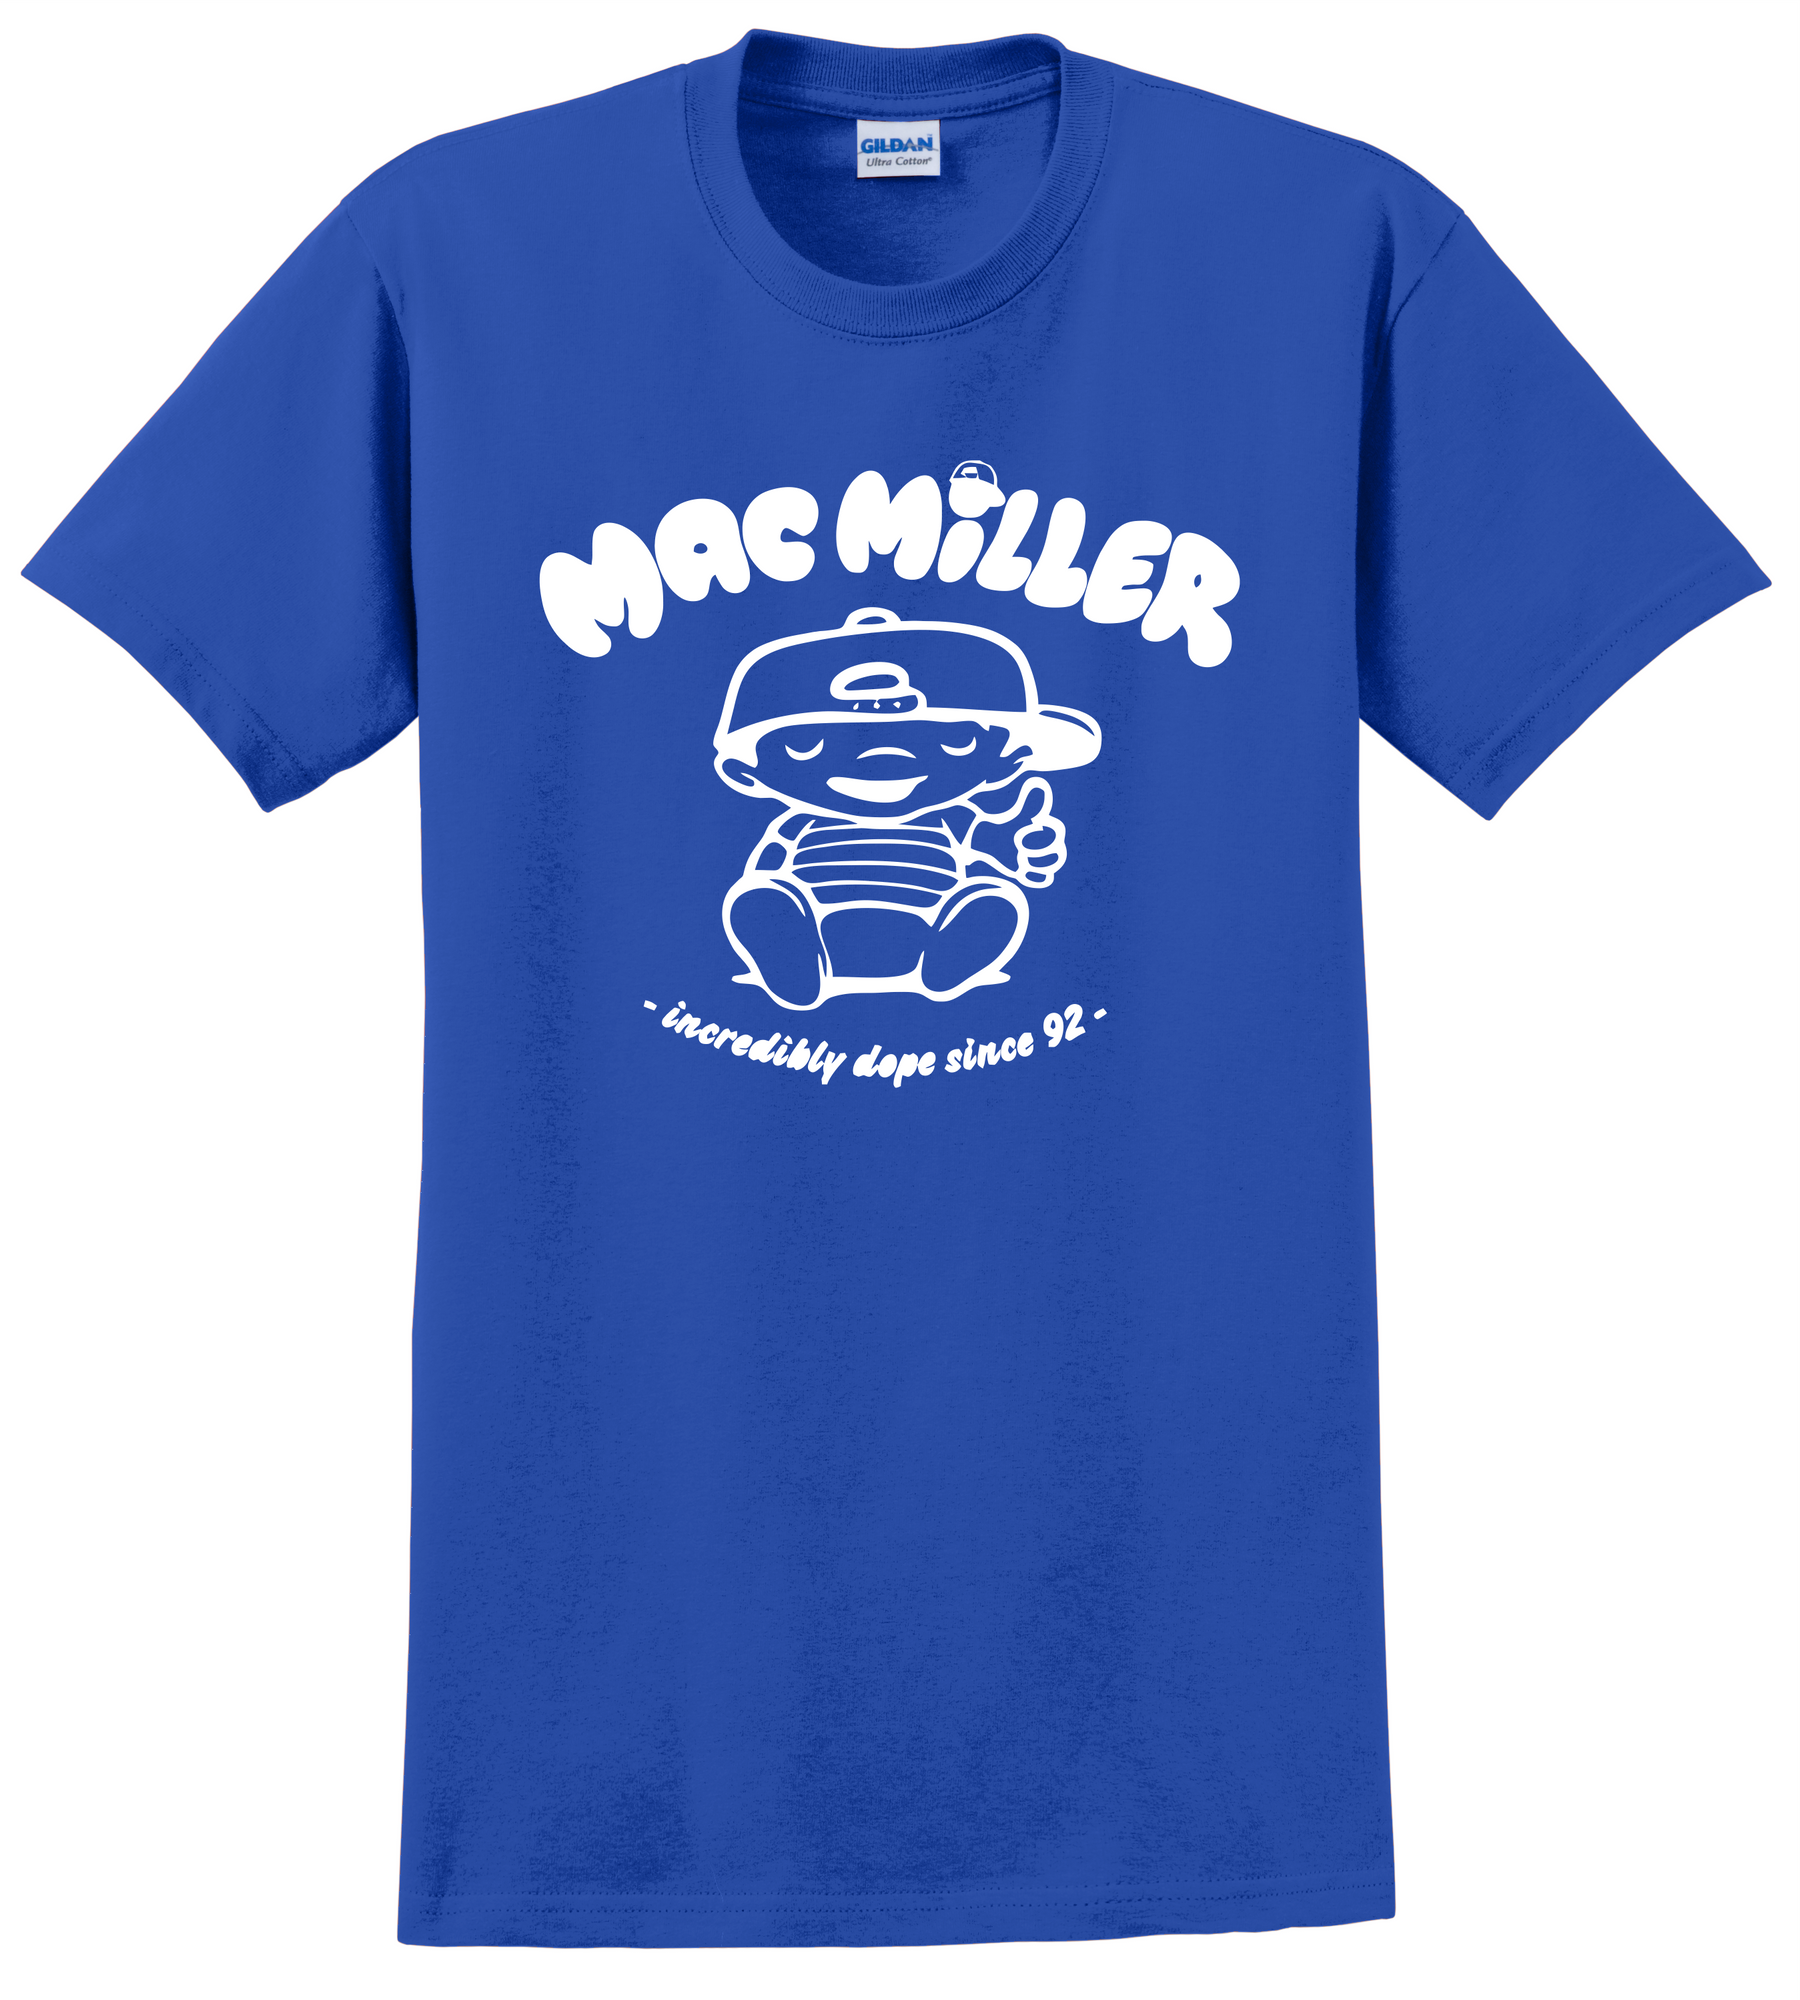 rip mac miller shirt